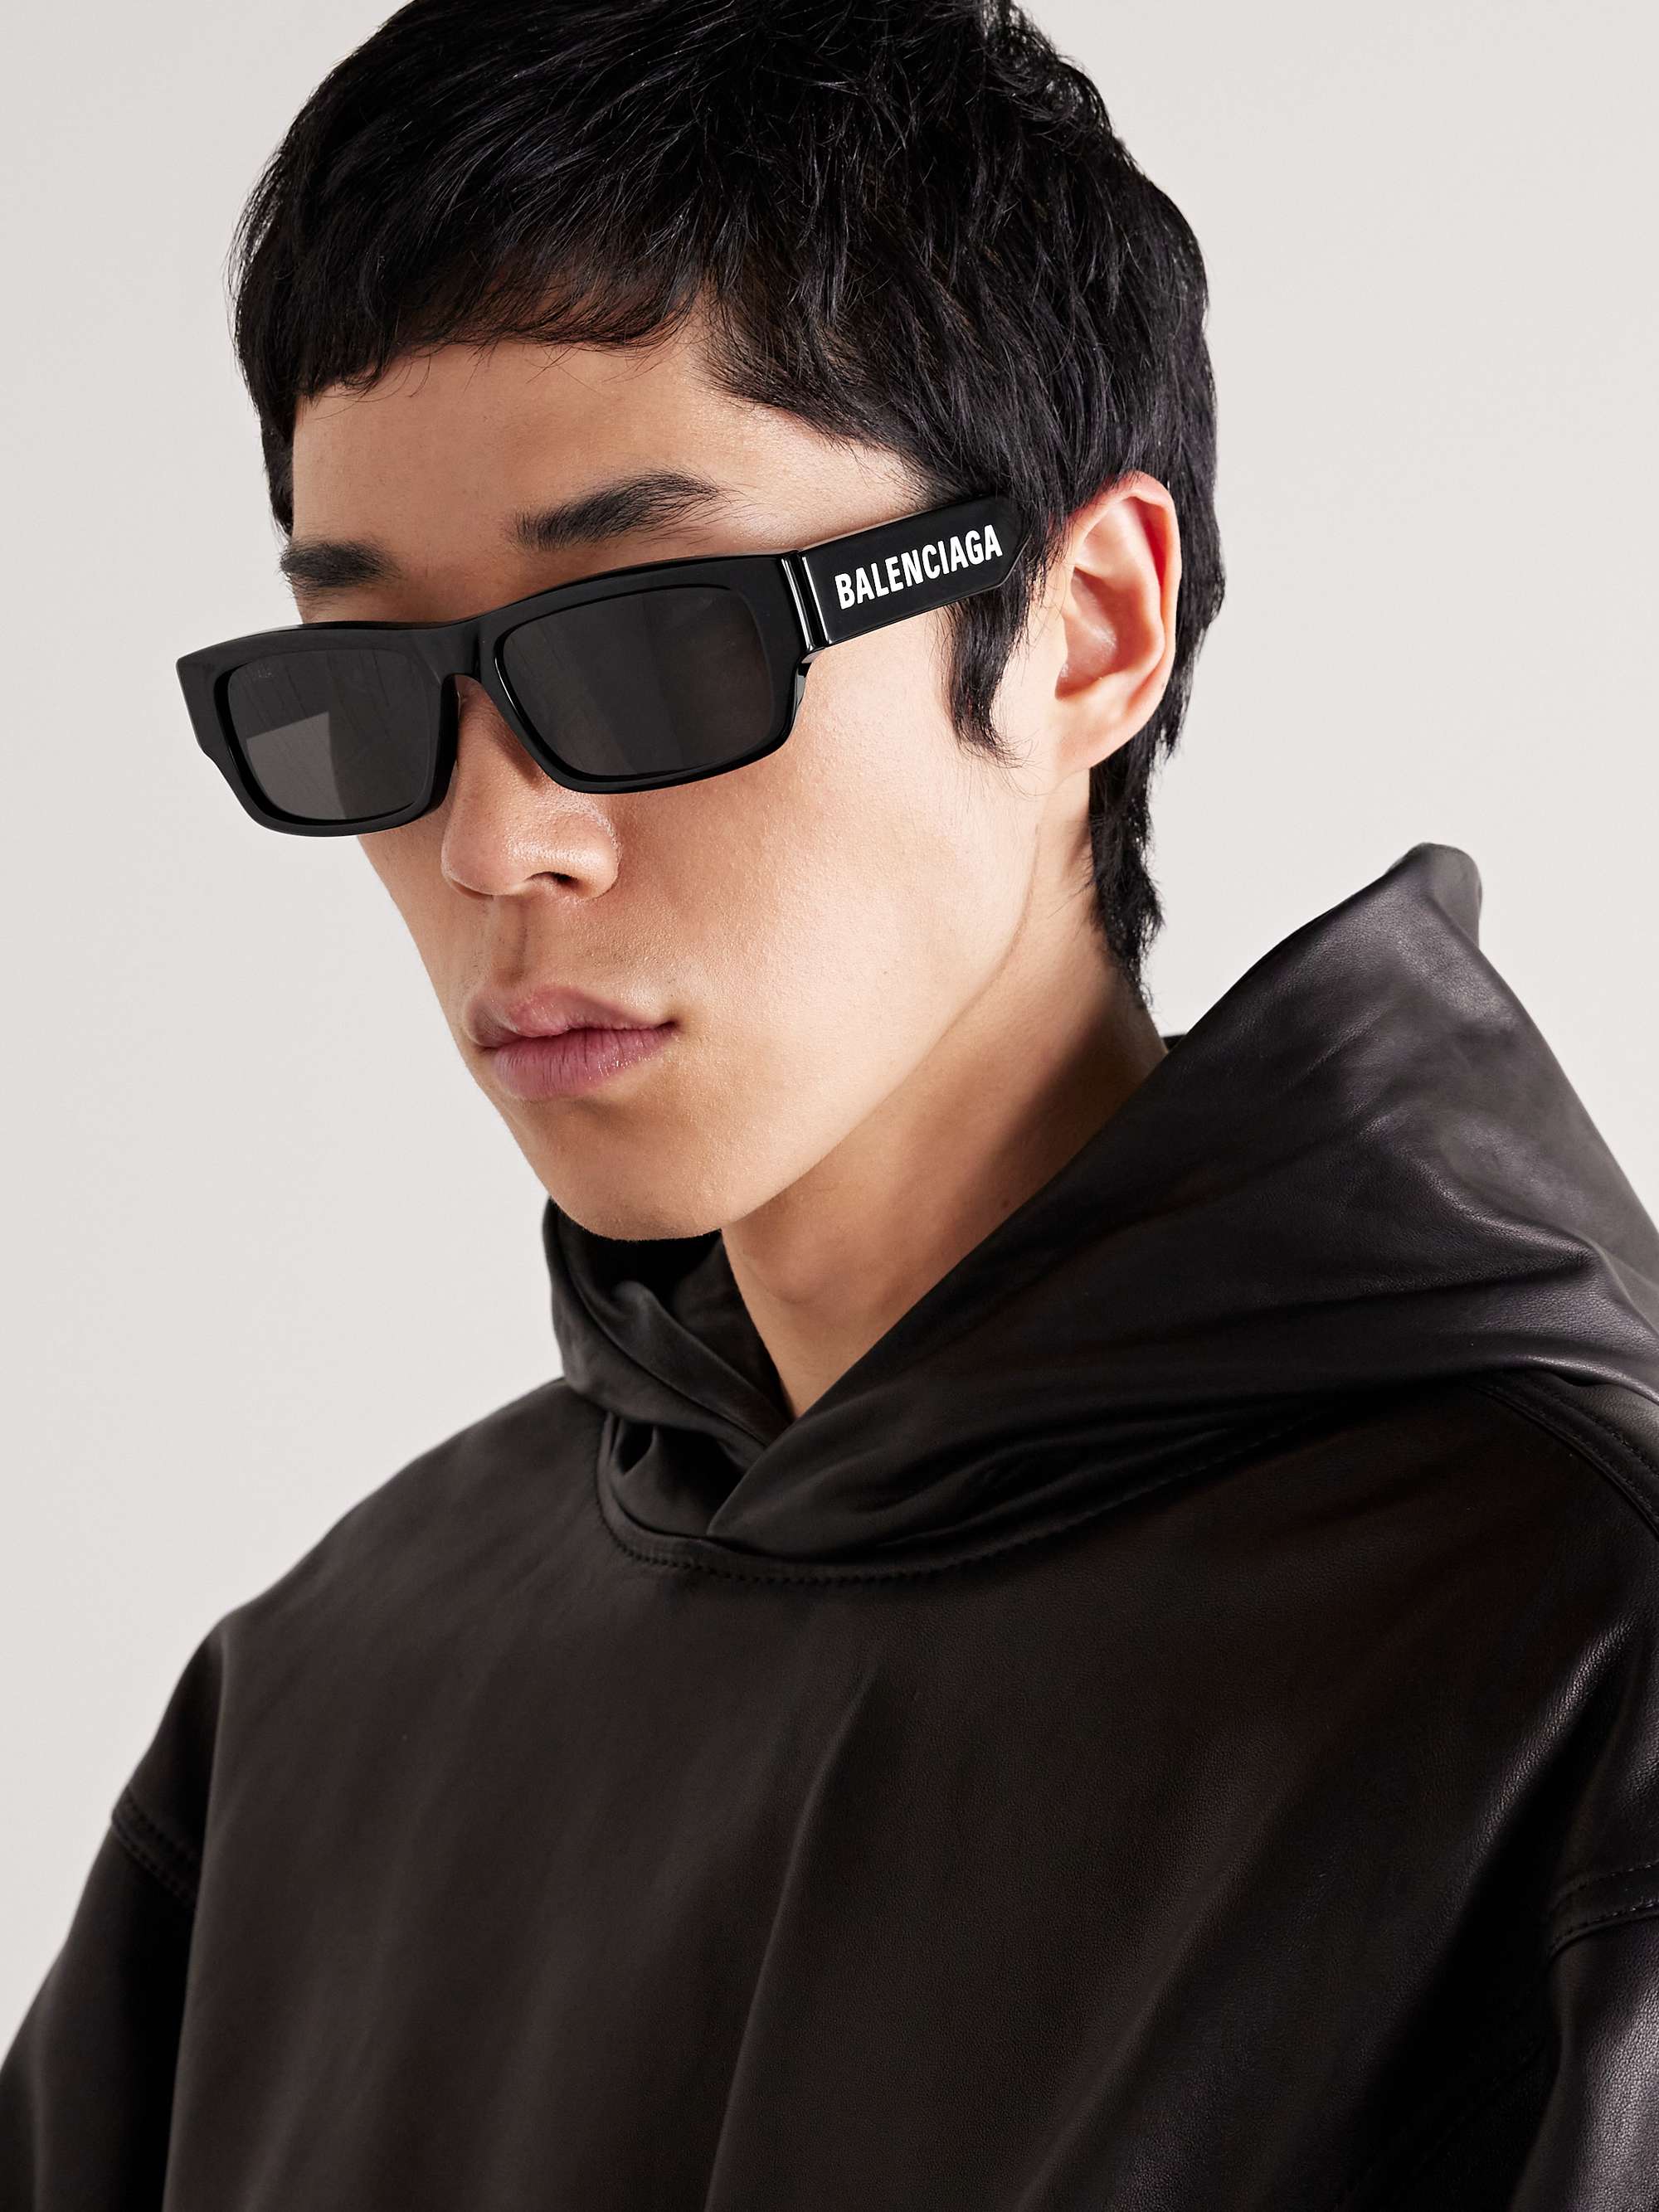 Men's & Women's Designer Sunglasses - Dior, Ray-Ban & More!